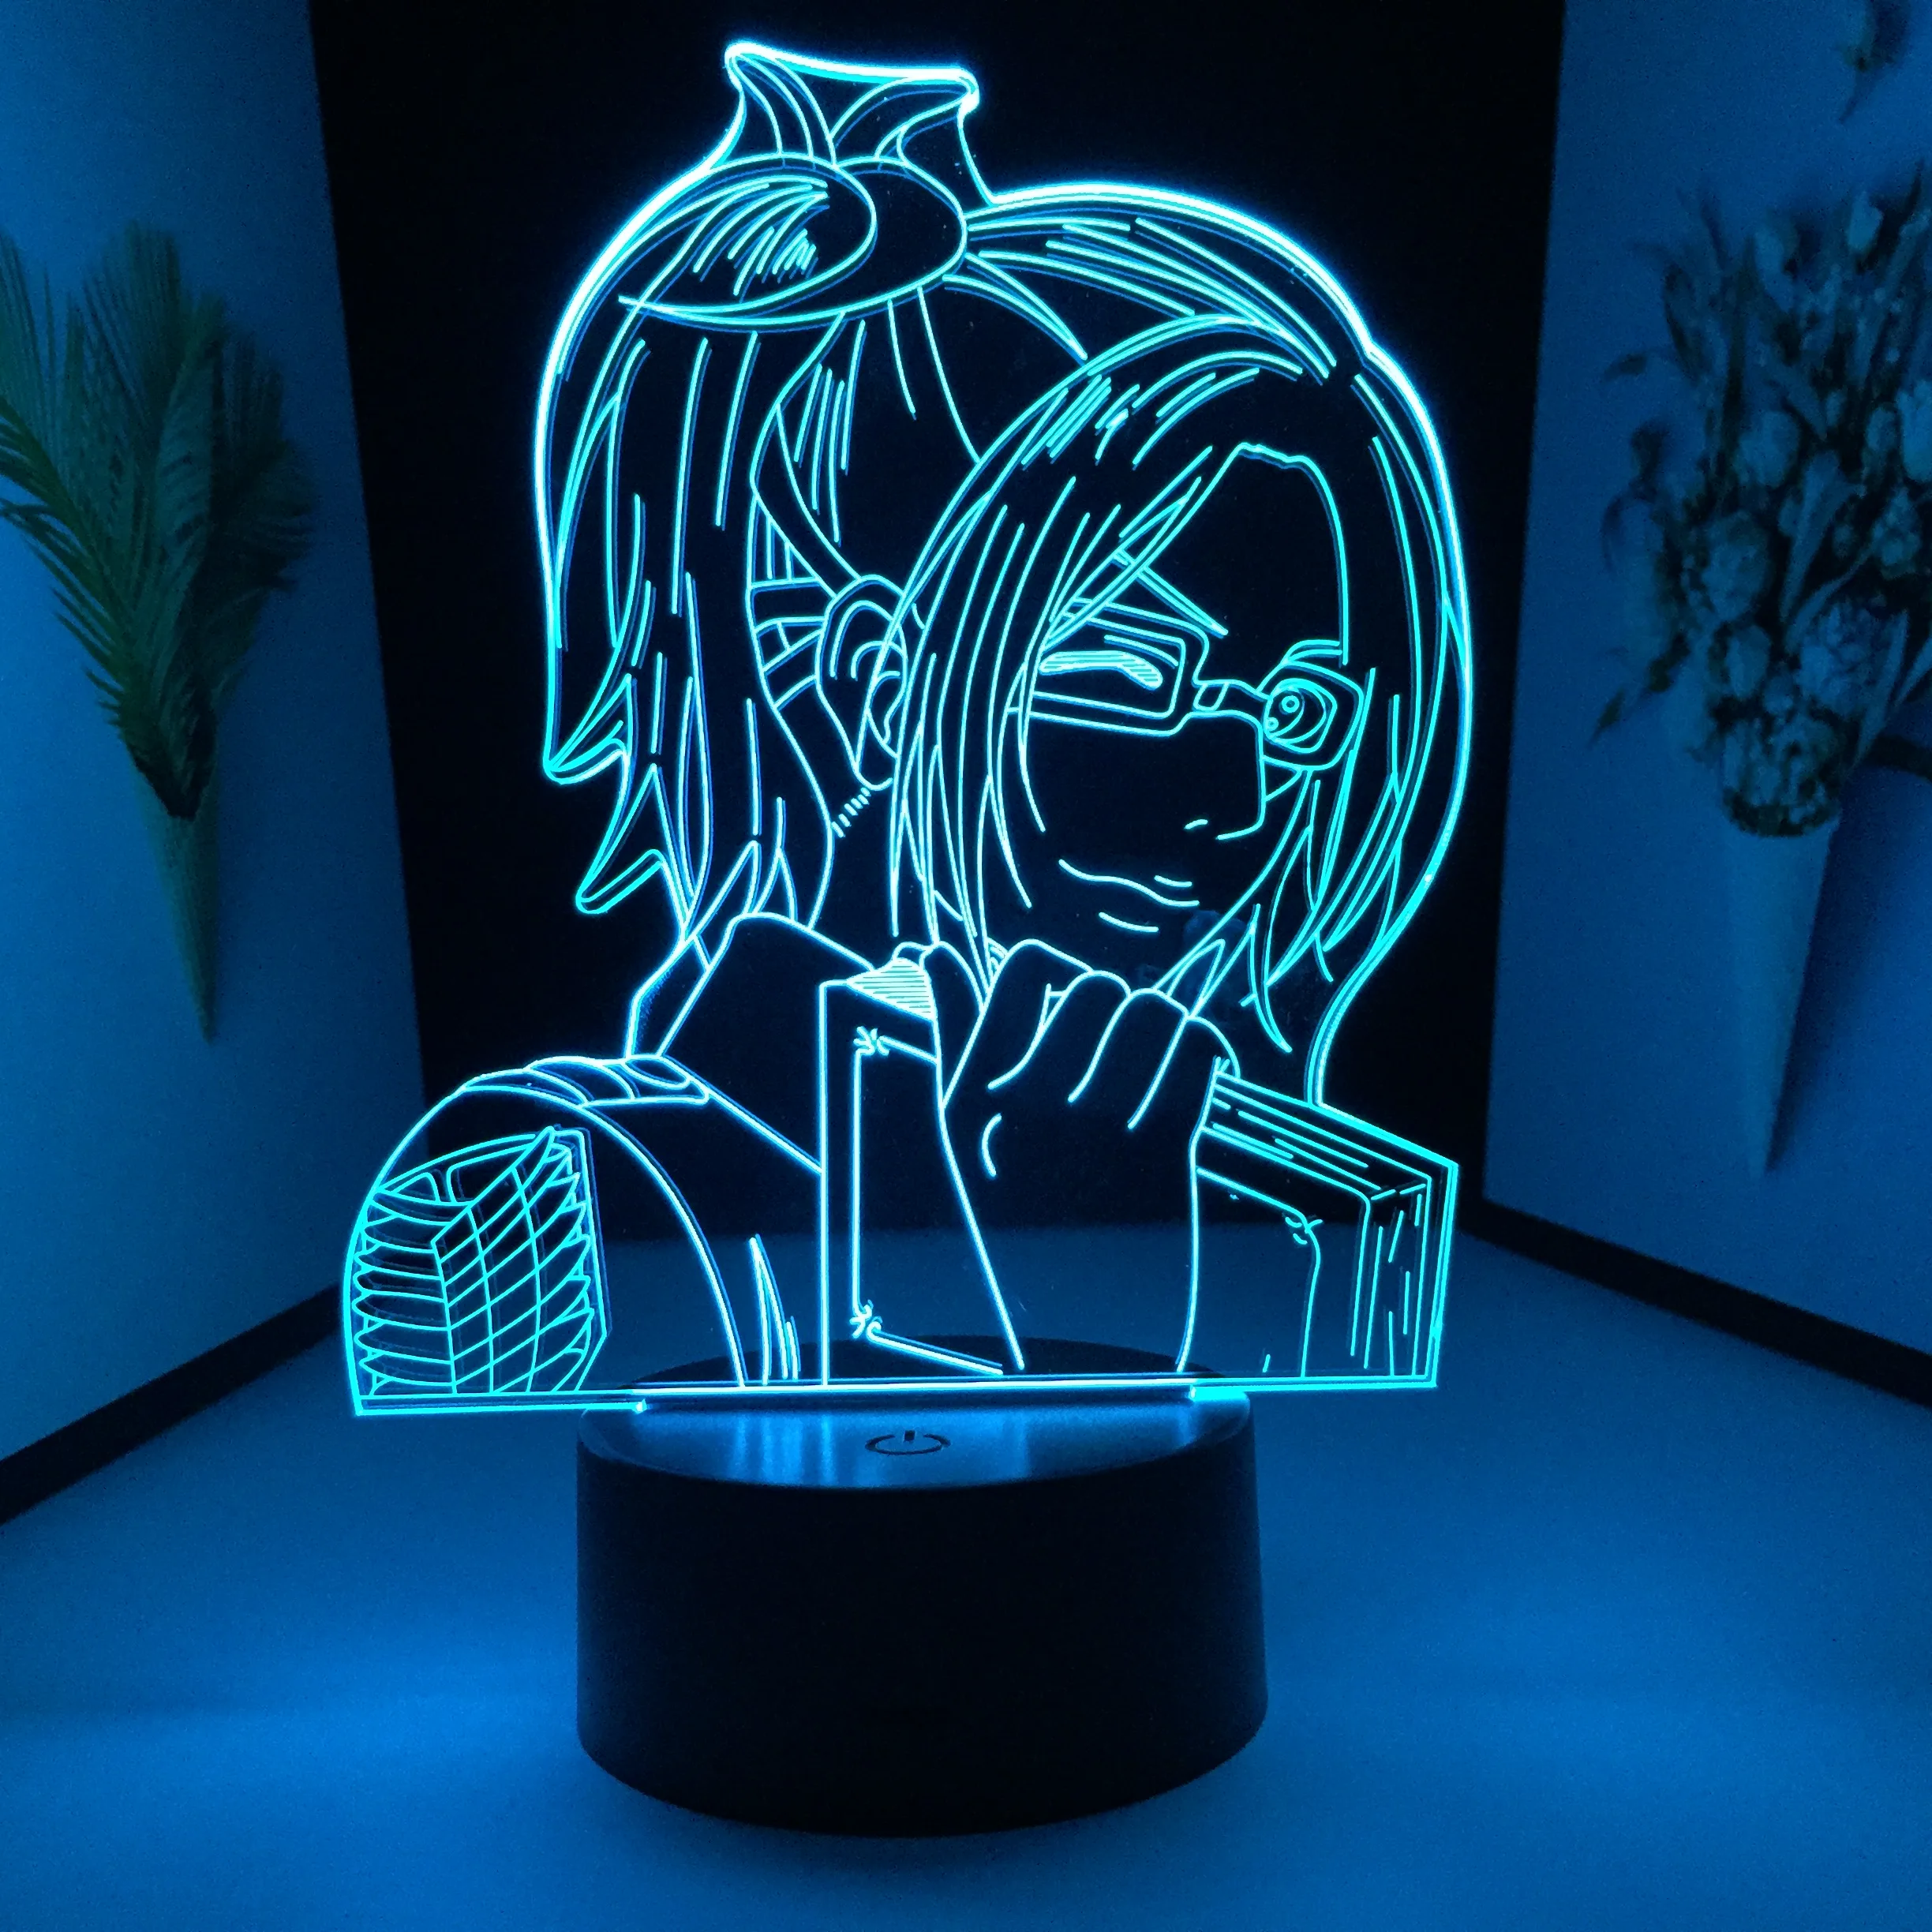 

Hange Zoe Anime Attack on Titan 3D Light Lamp for Birthday Gift Home Decor Manga Attack on Titan LED Night Lamp Dropshipping